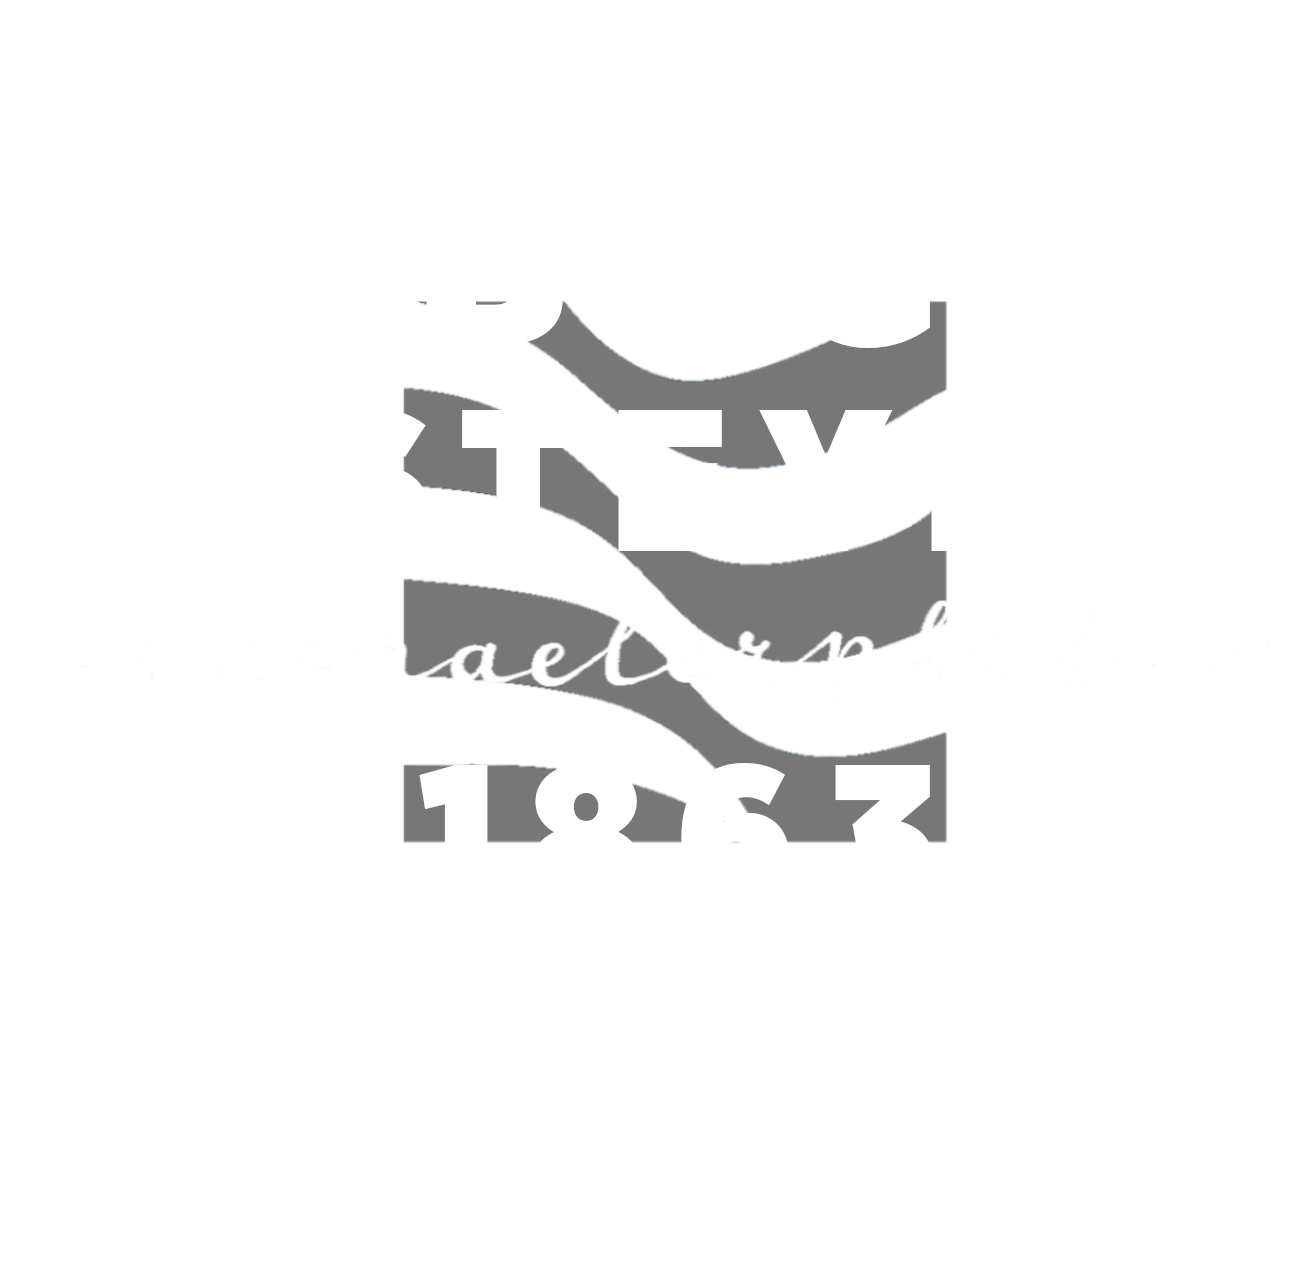 BRG STEYR Logo